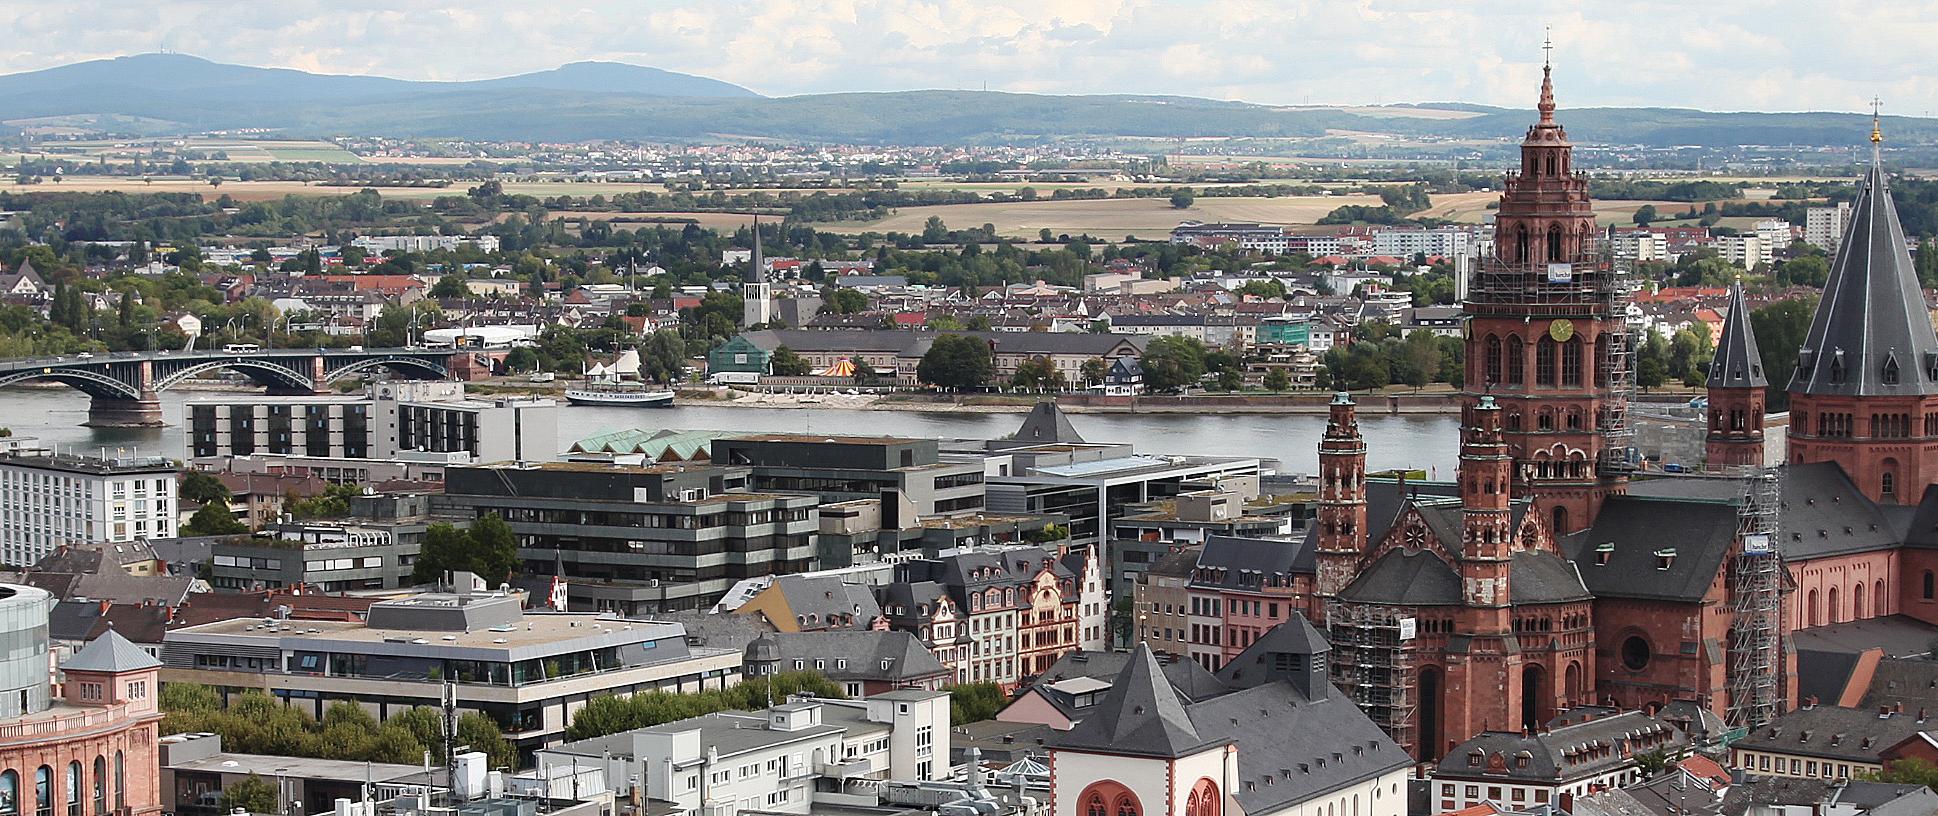 Panorama Mainz